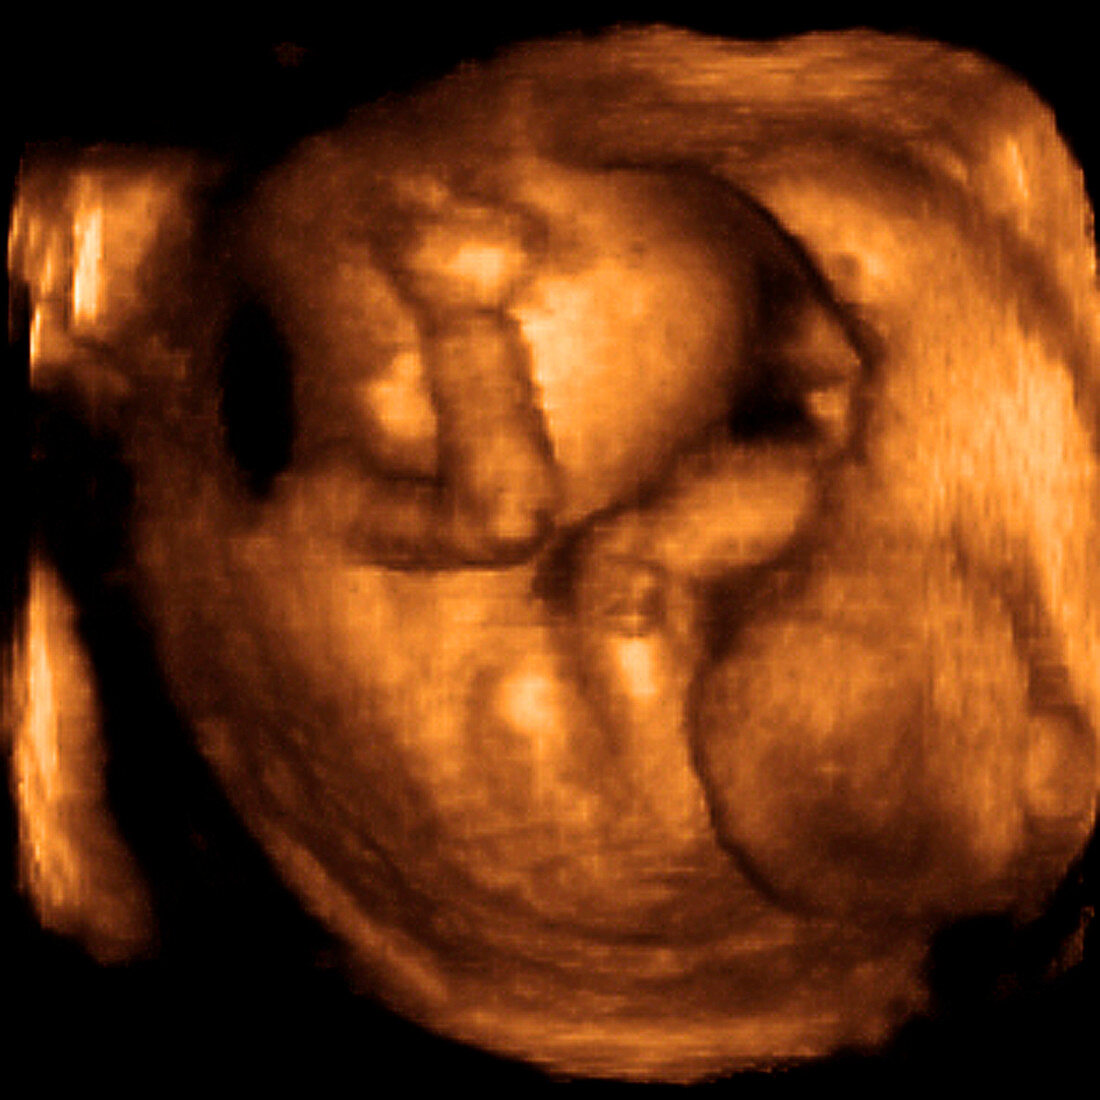 Foetus at 18 weeks,3-D ultrasound scan